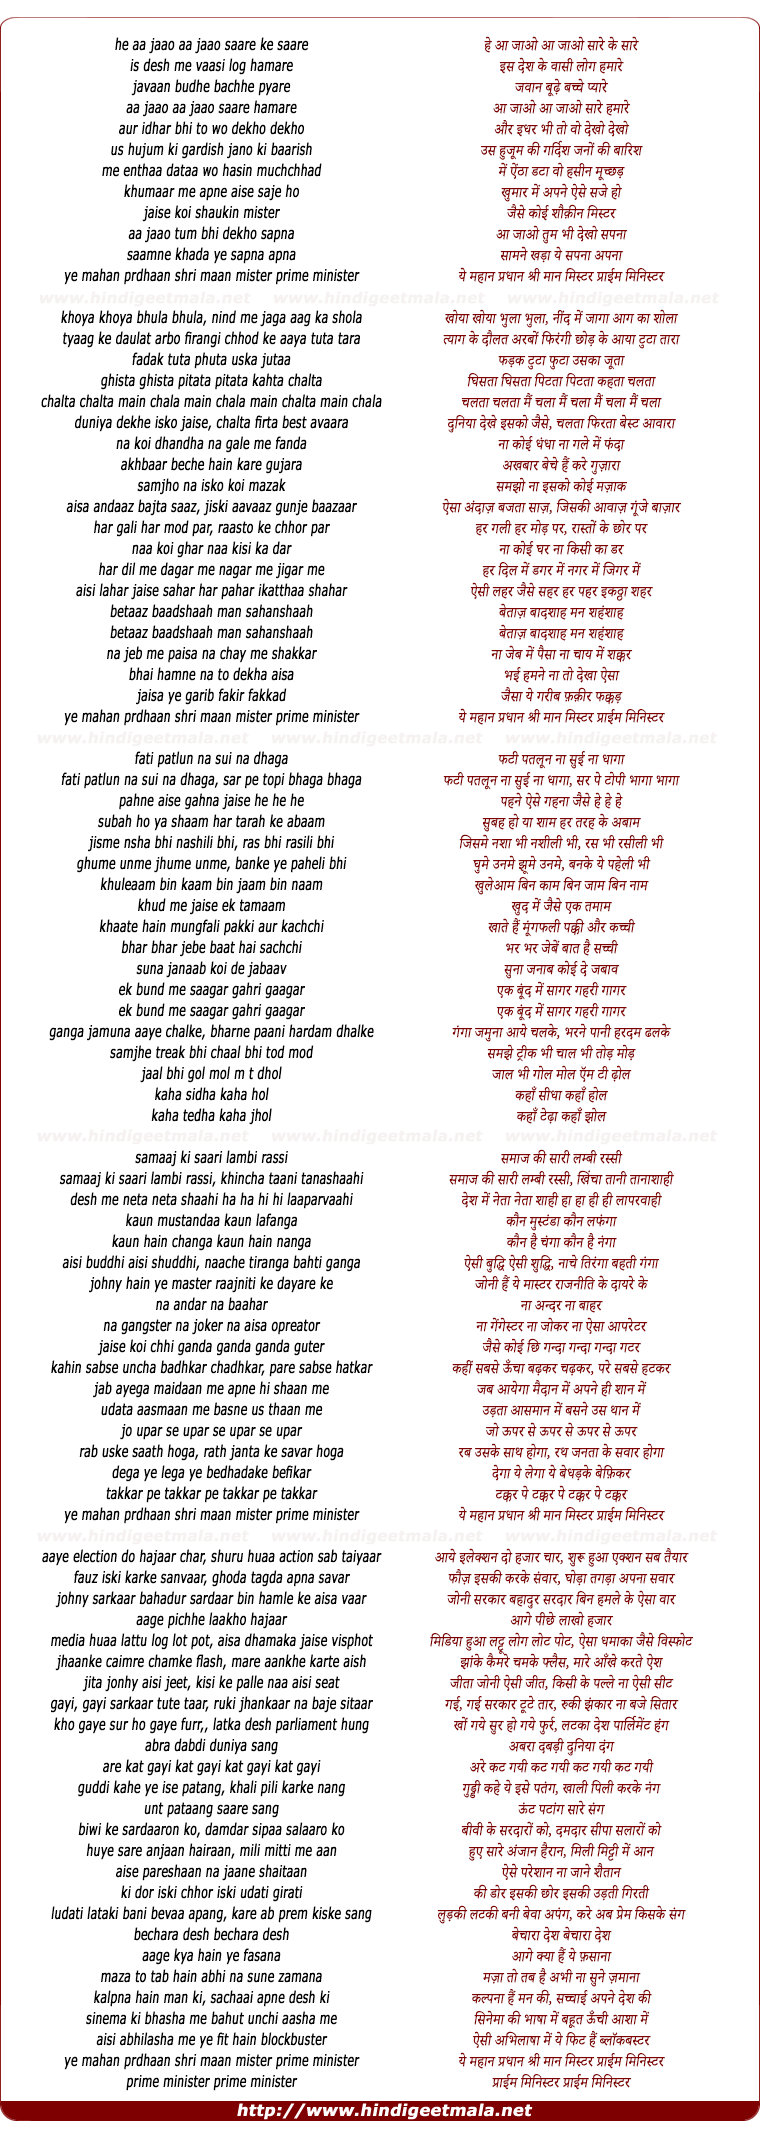 lyrics of song Mr. Prime Minister (Hindi)